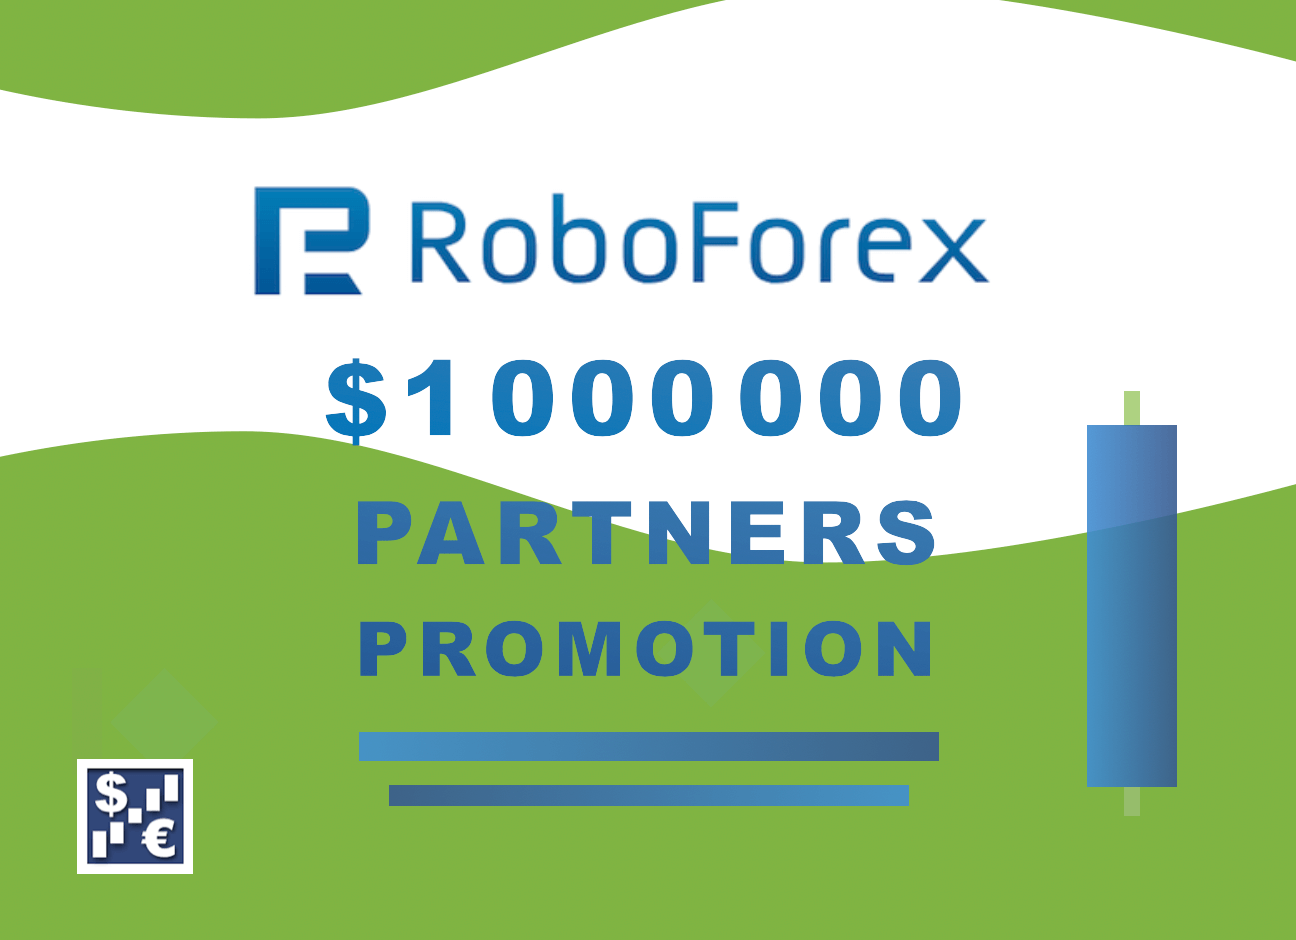 RoboForex Partners Promotion